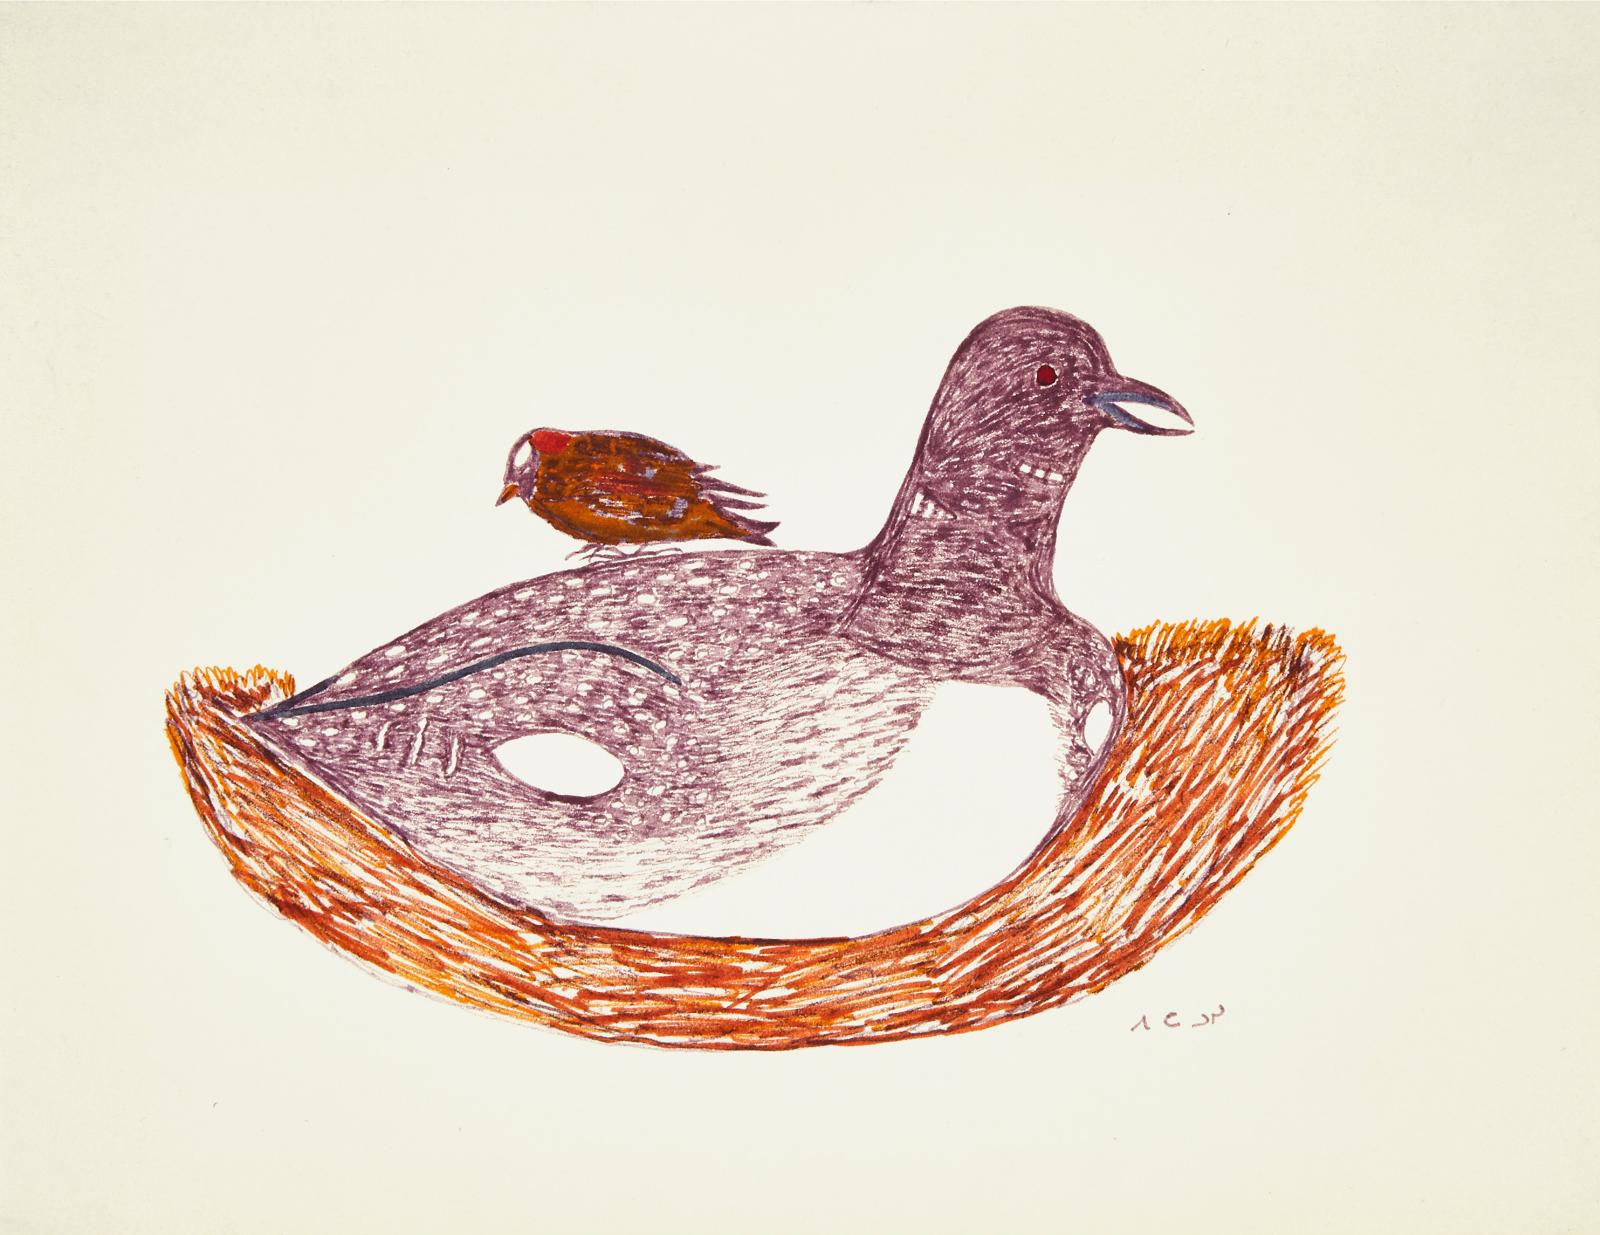 Pitaloosie Saila (1942-2021) - Untitled (Nesting Loon)